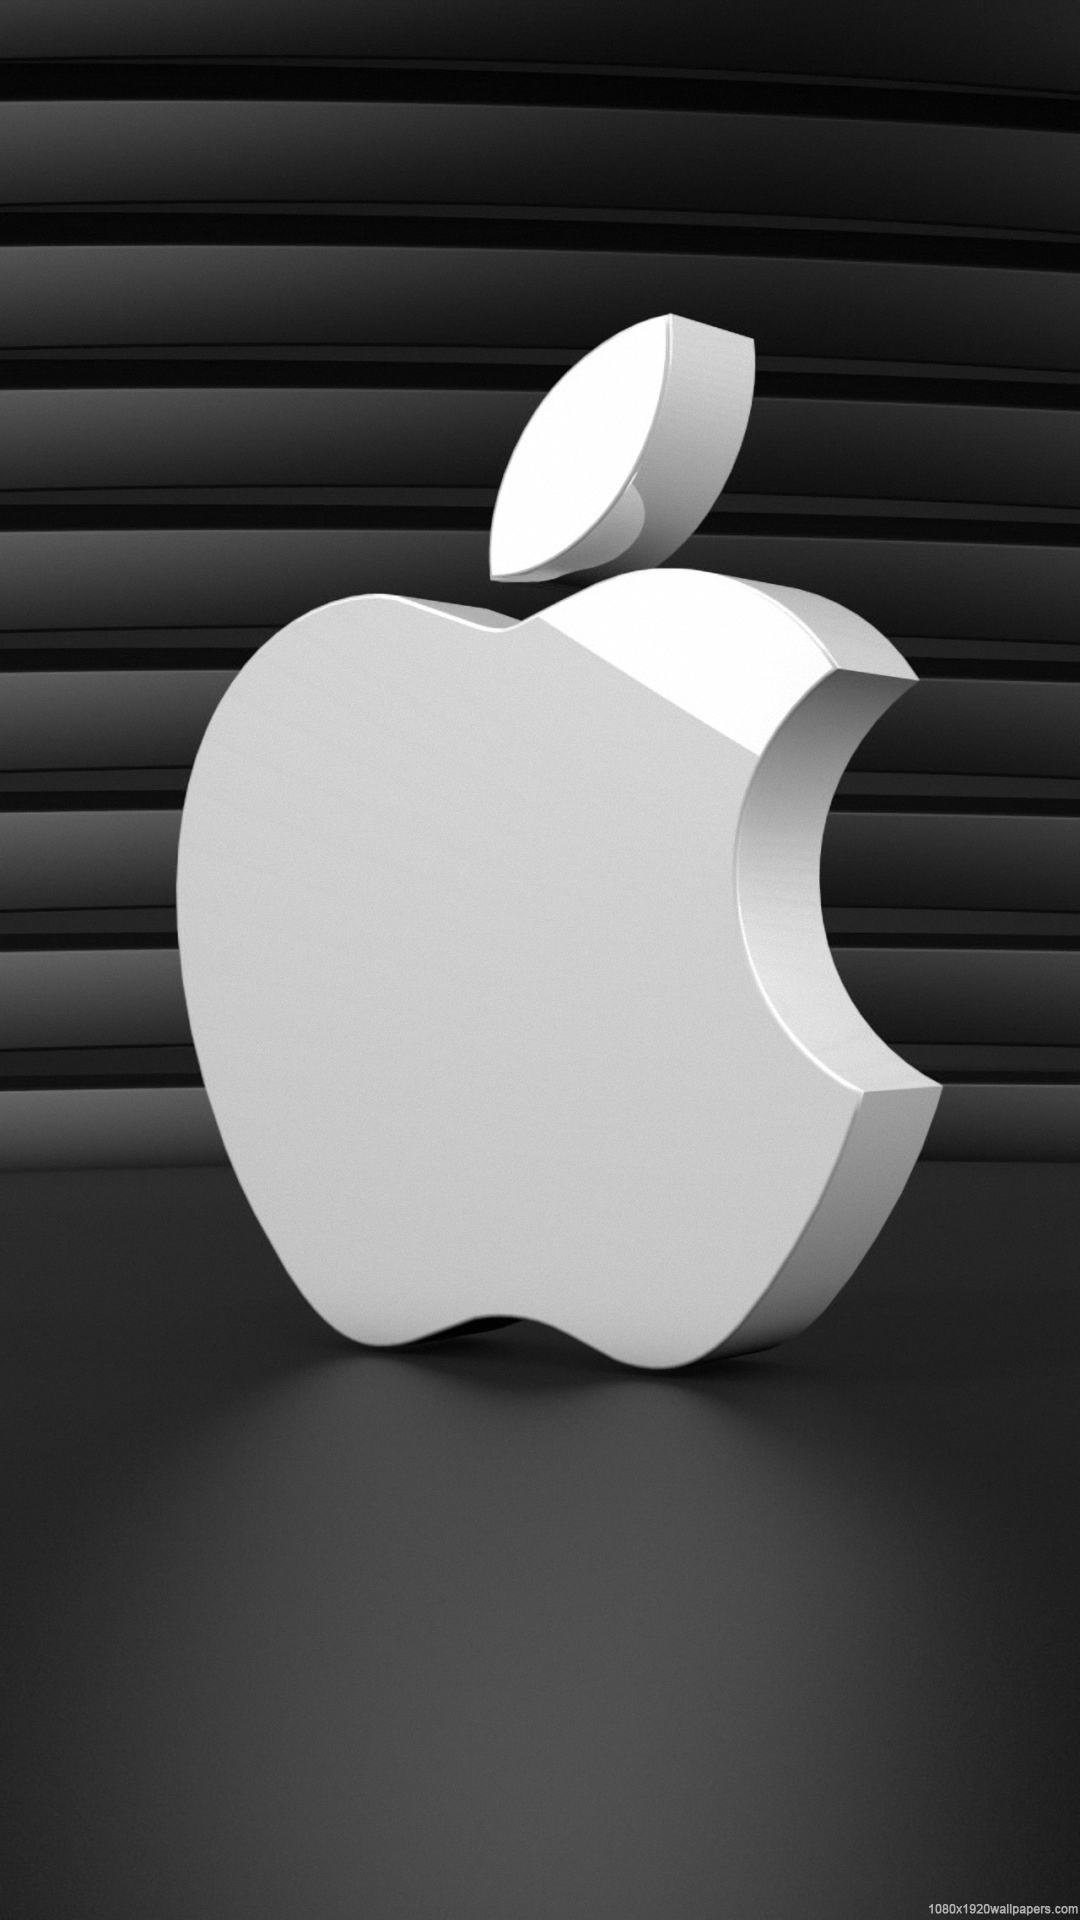 apple wallpaper hd,logo,design,font,black and white,table